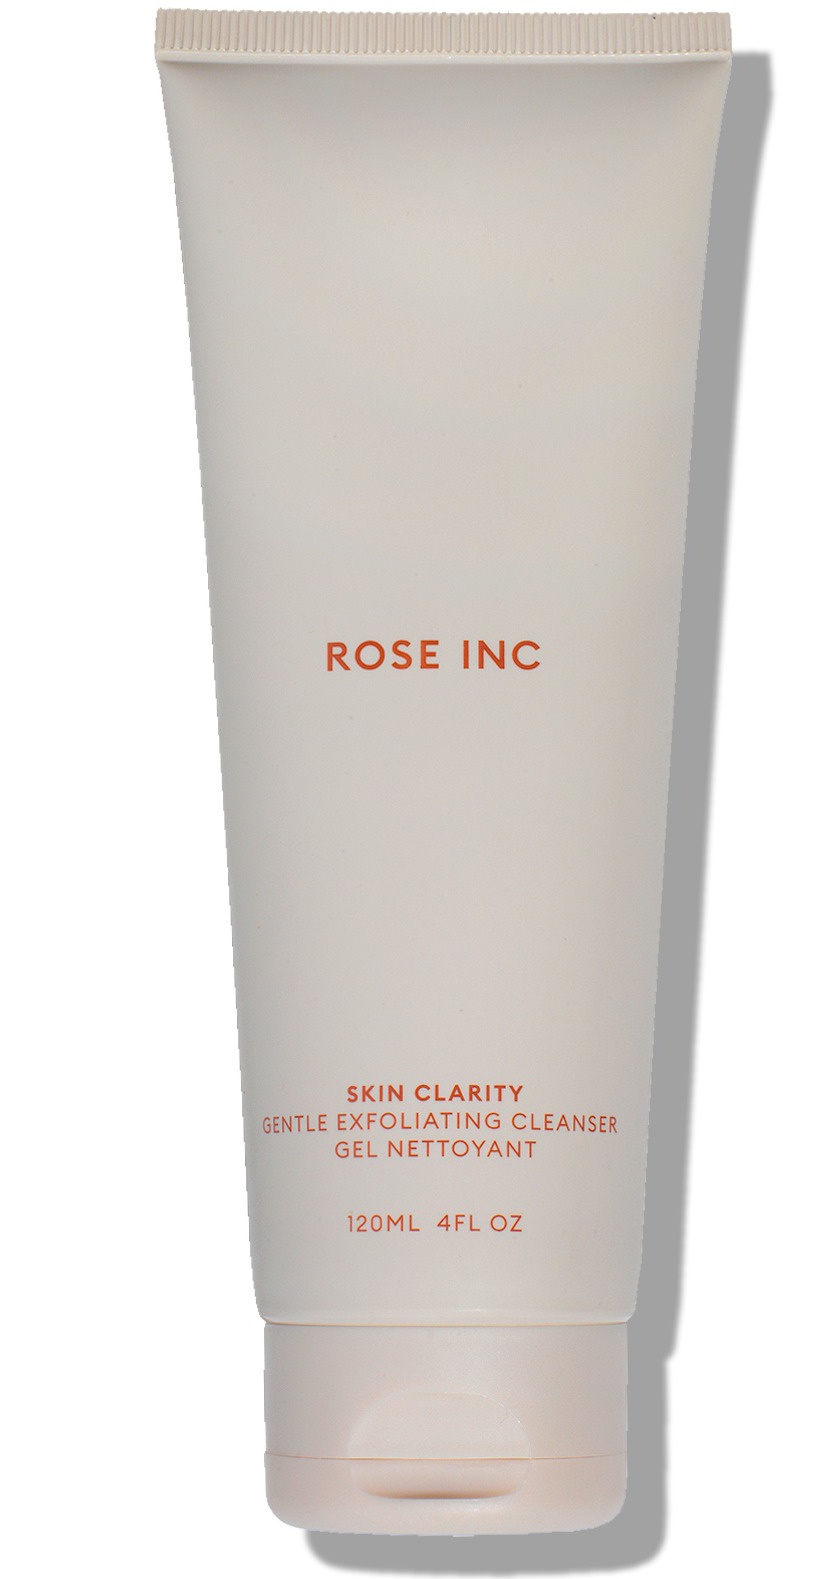 Rose Inc Skin Clarity Gentle Exfoliating Cleanser